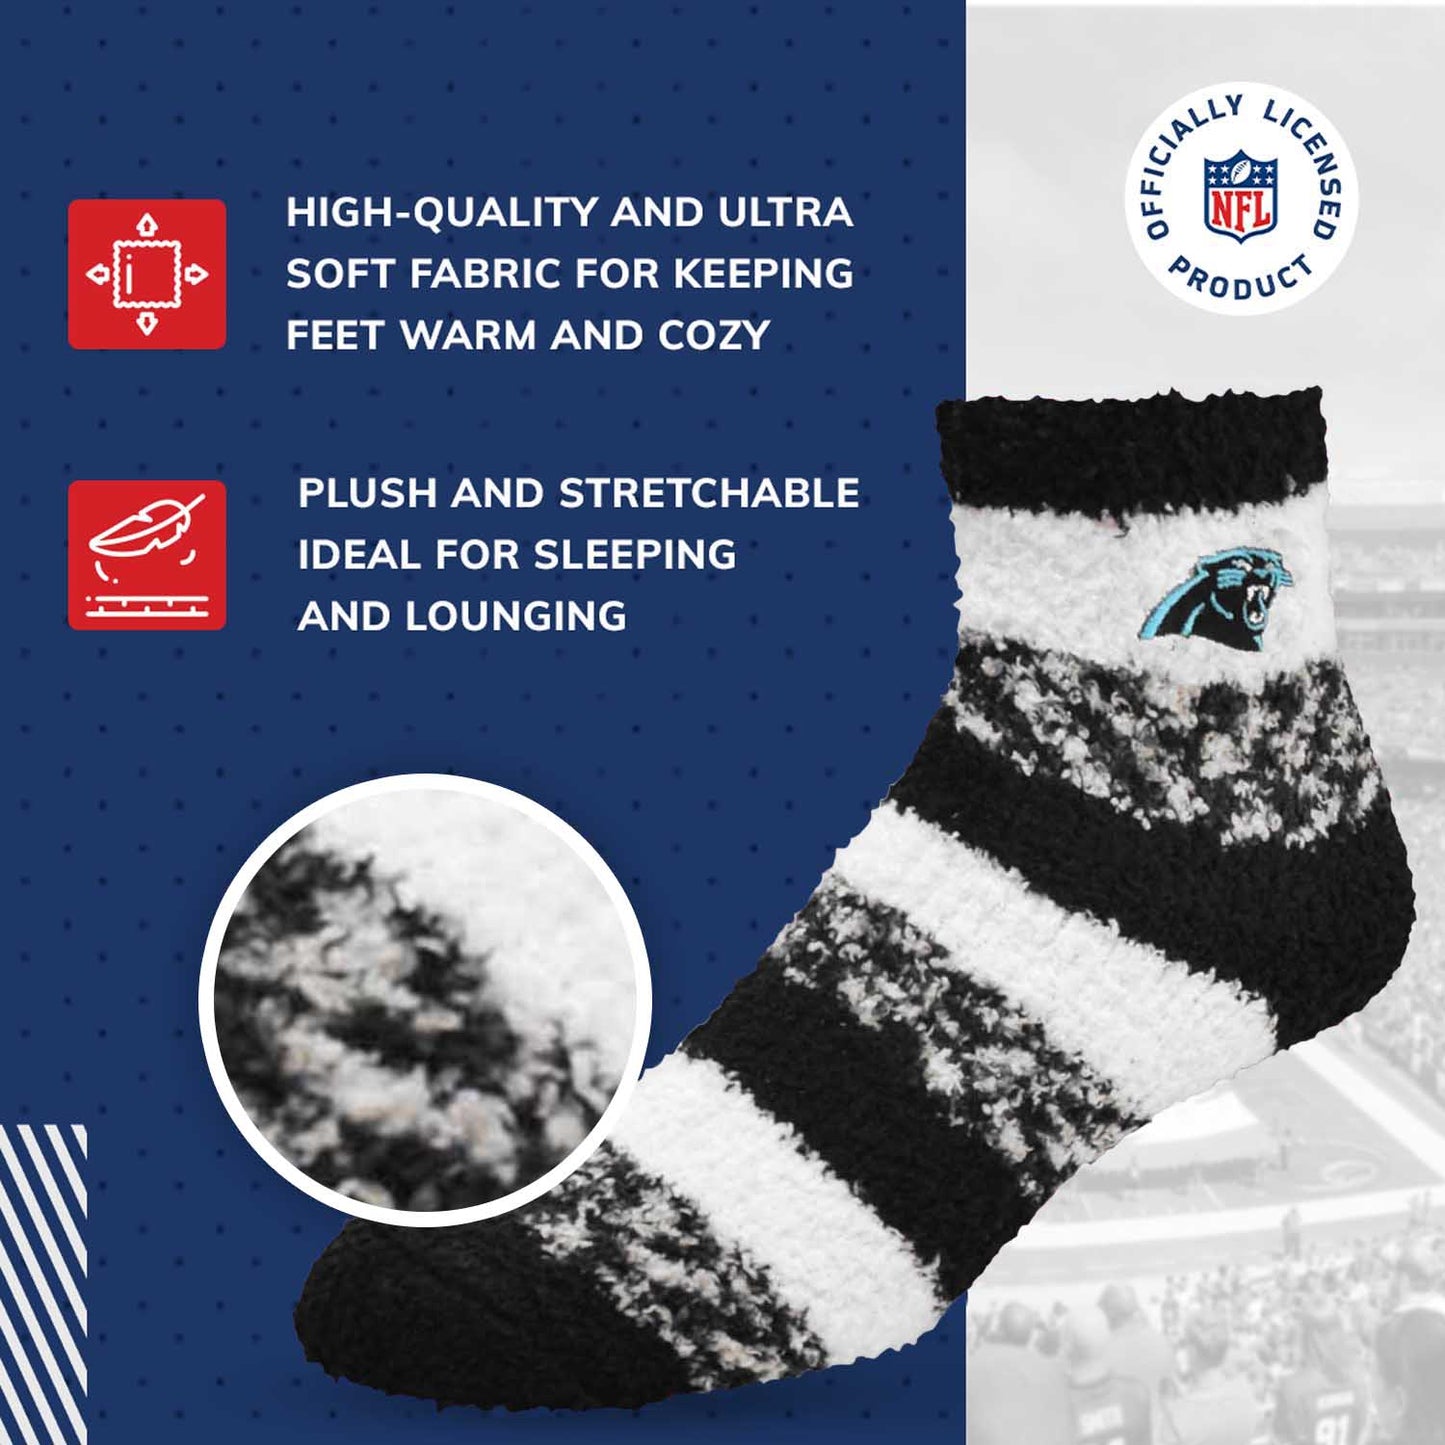 Carolina Panthers NFL Cozy Soft Slipper Socks - Black